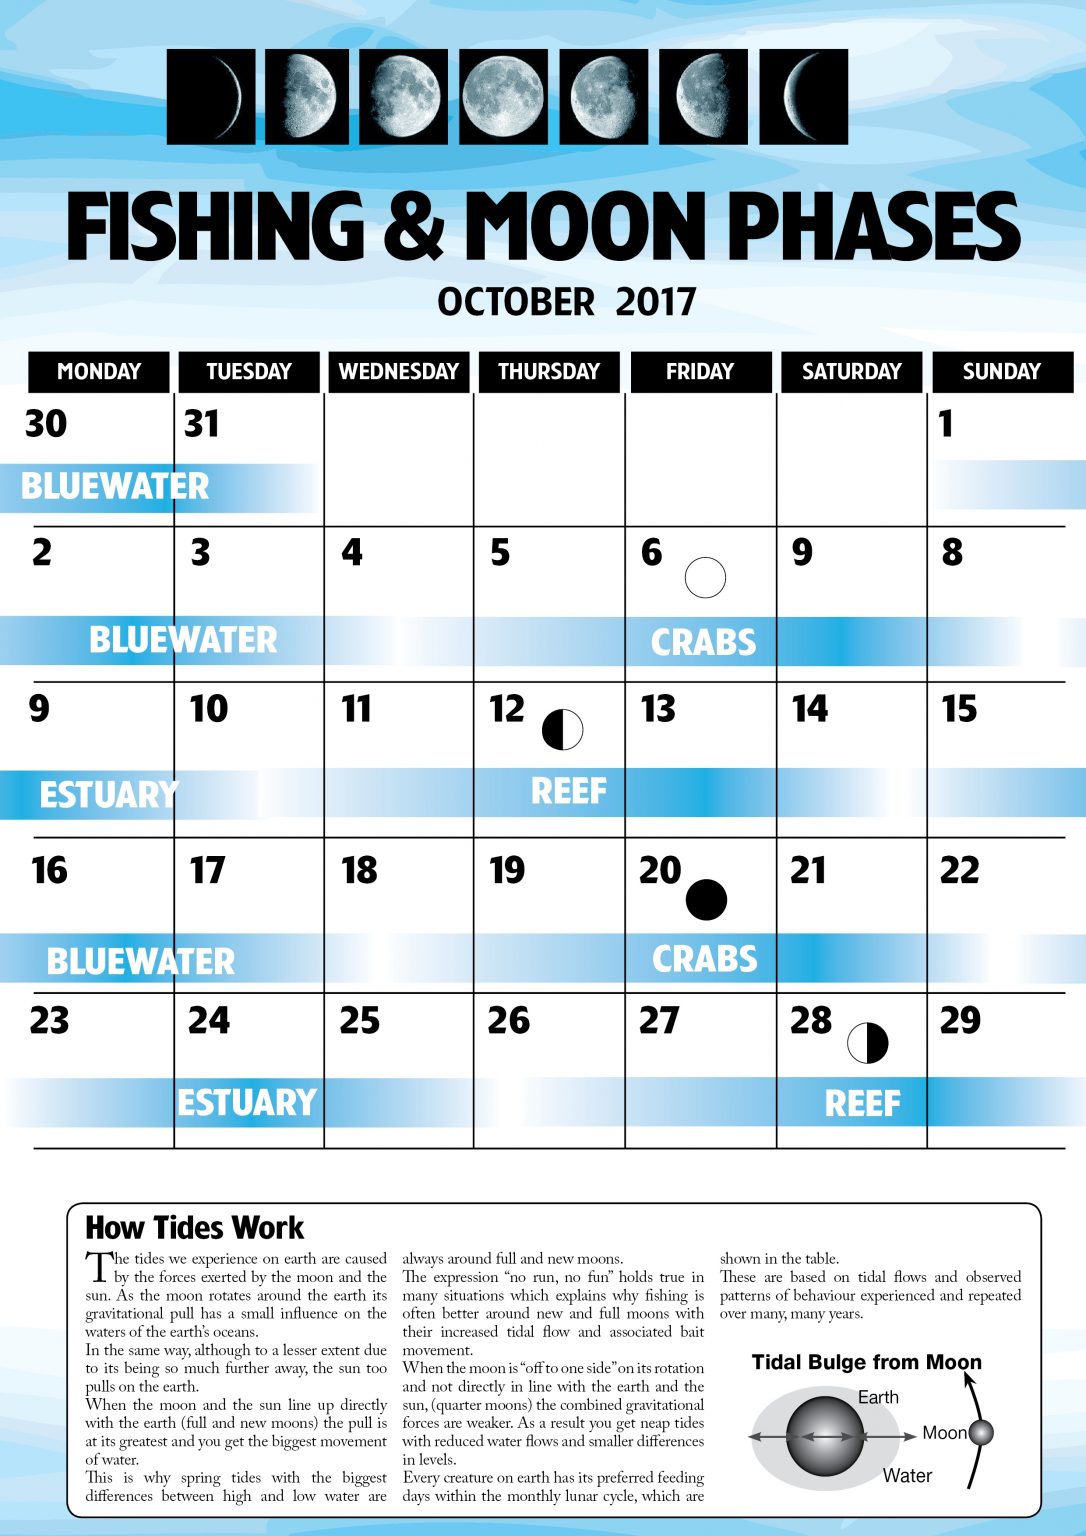 October 2017 Fishing & Moon Phases Fish & Boat Magazine